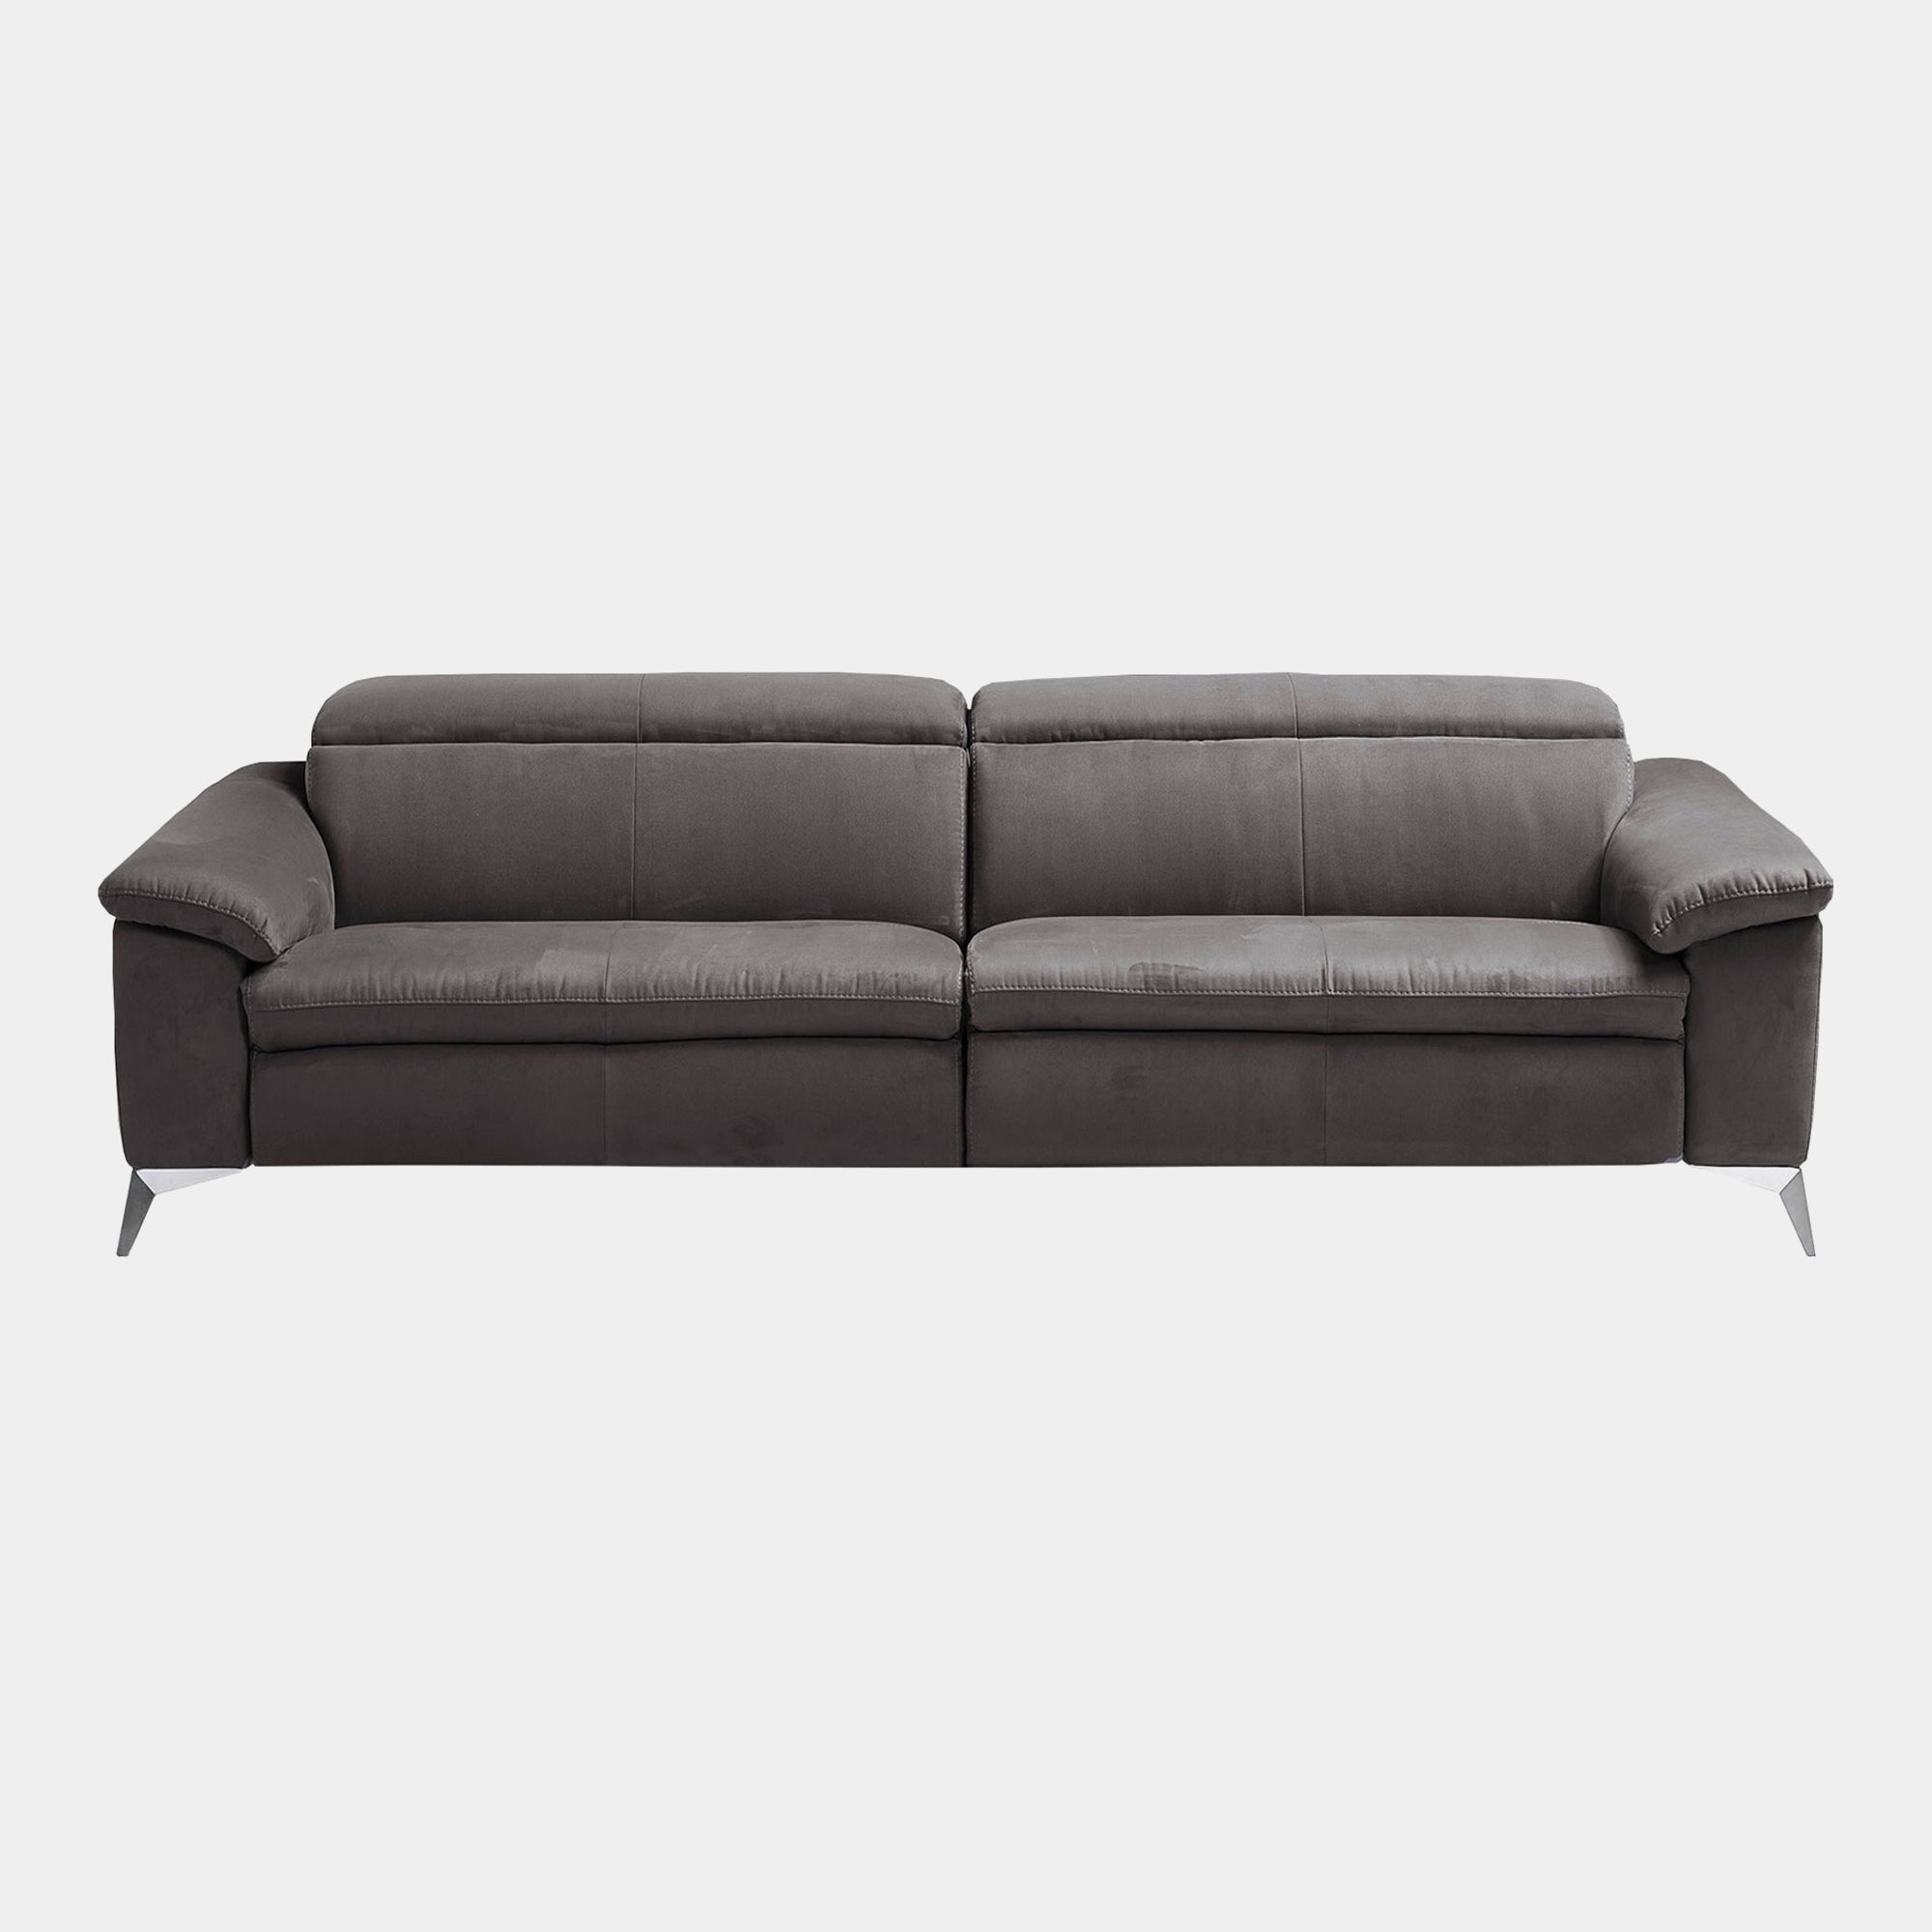 Potenza - 3 Seat Sofa In Fabric Or Leather Microfibre